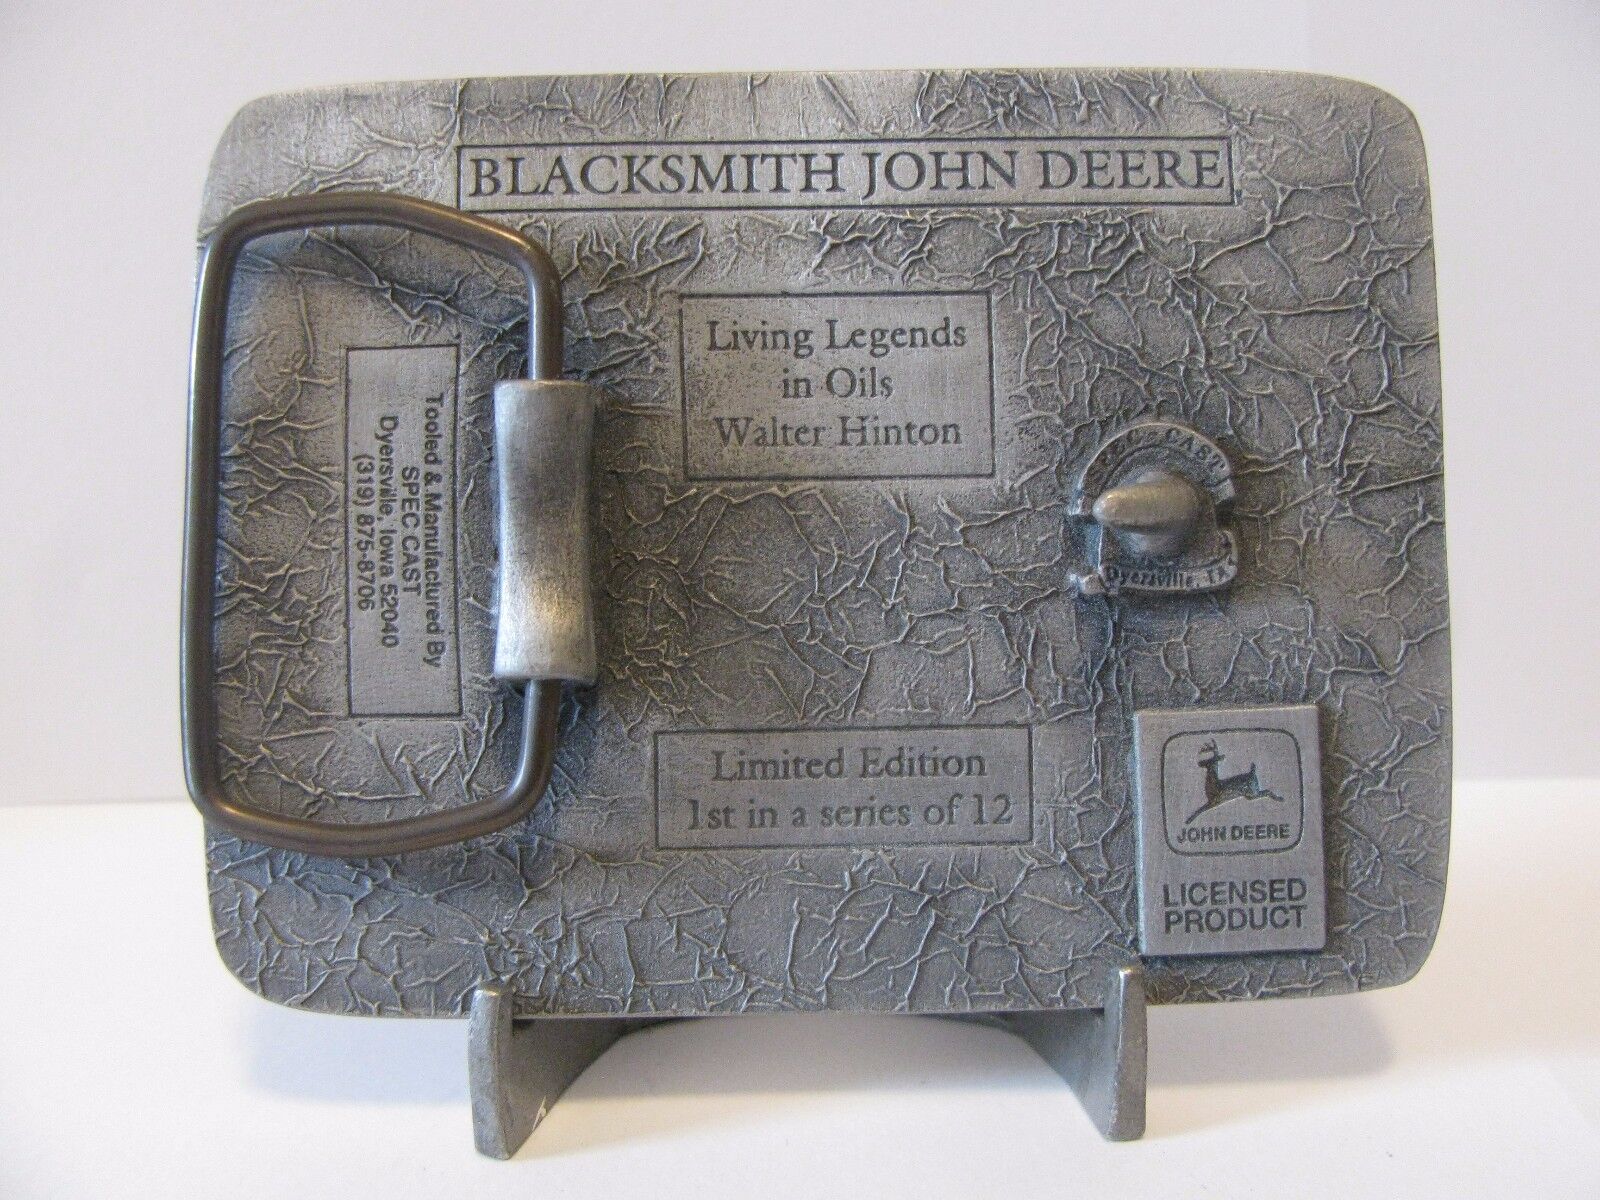 1999 John Deere Blacksmith A Tractor Plow Belt Buckle Limited Ed Hinton 1st Ser JOHN DEERE - фотография #2